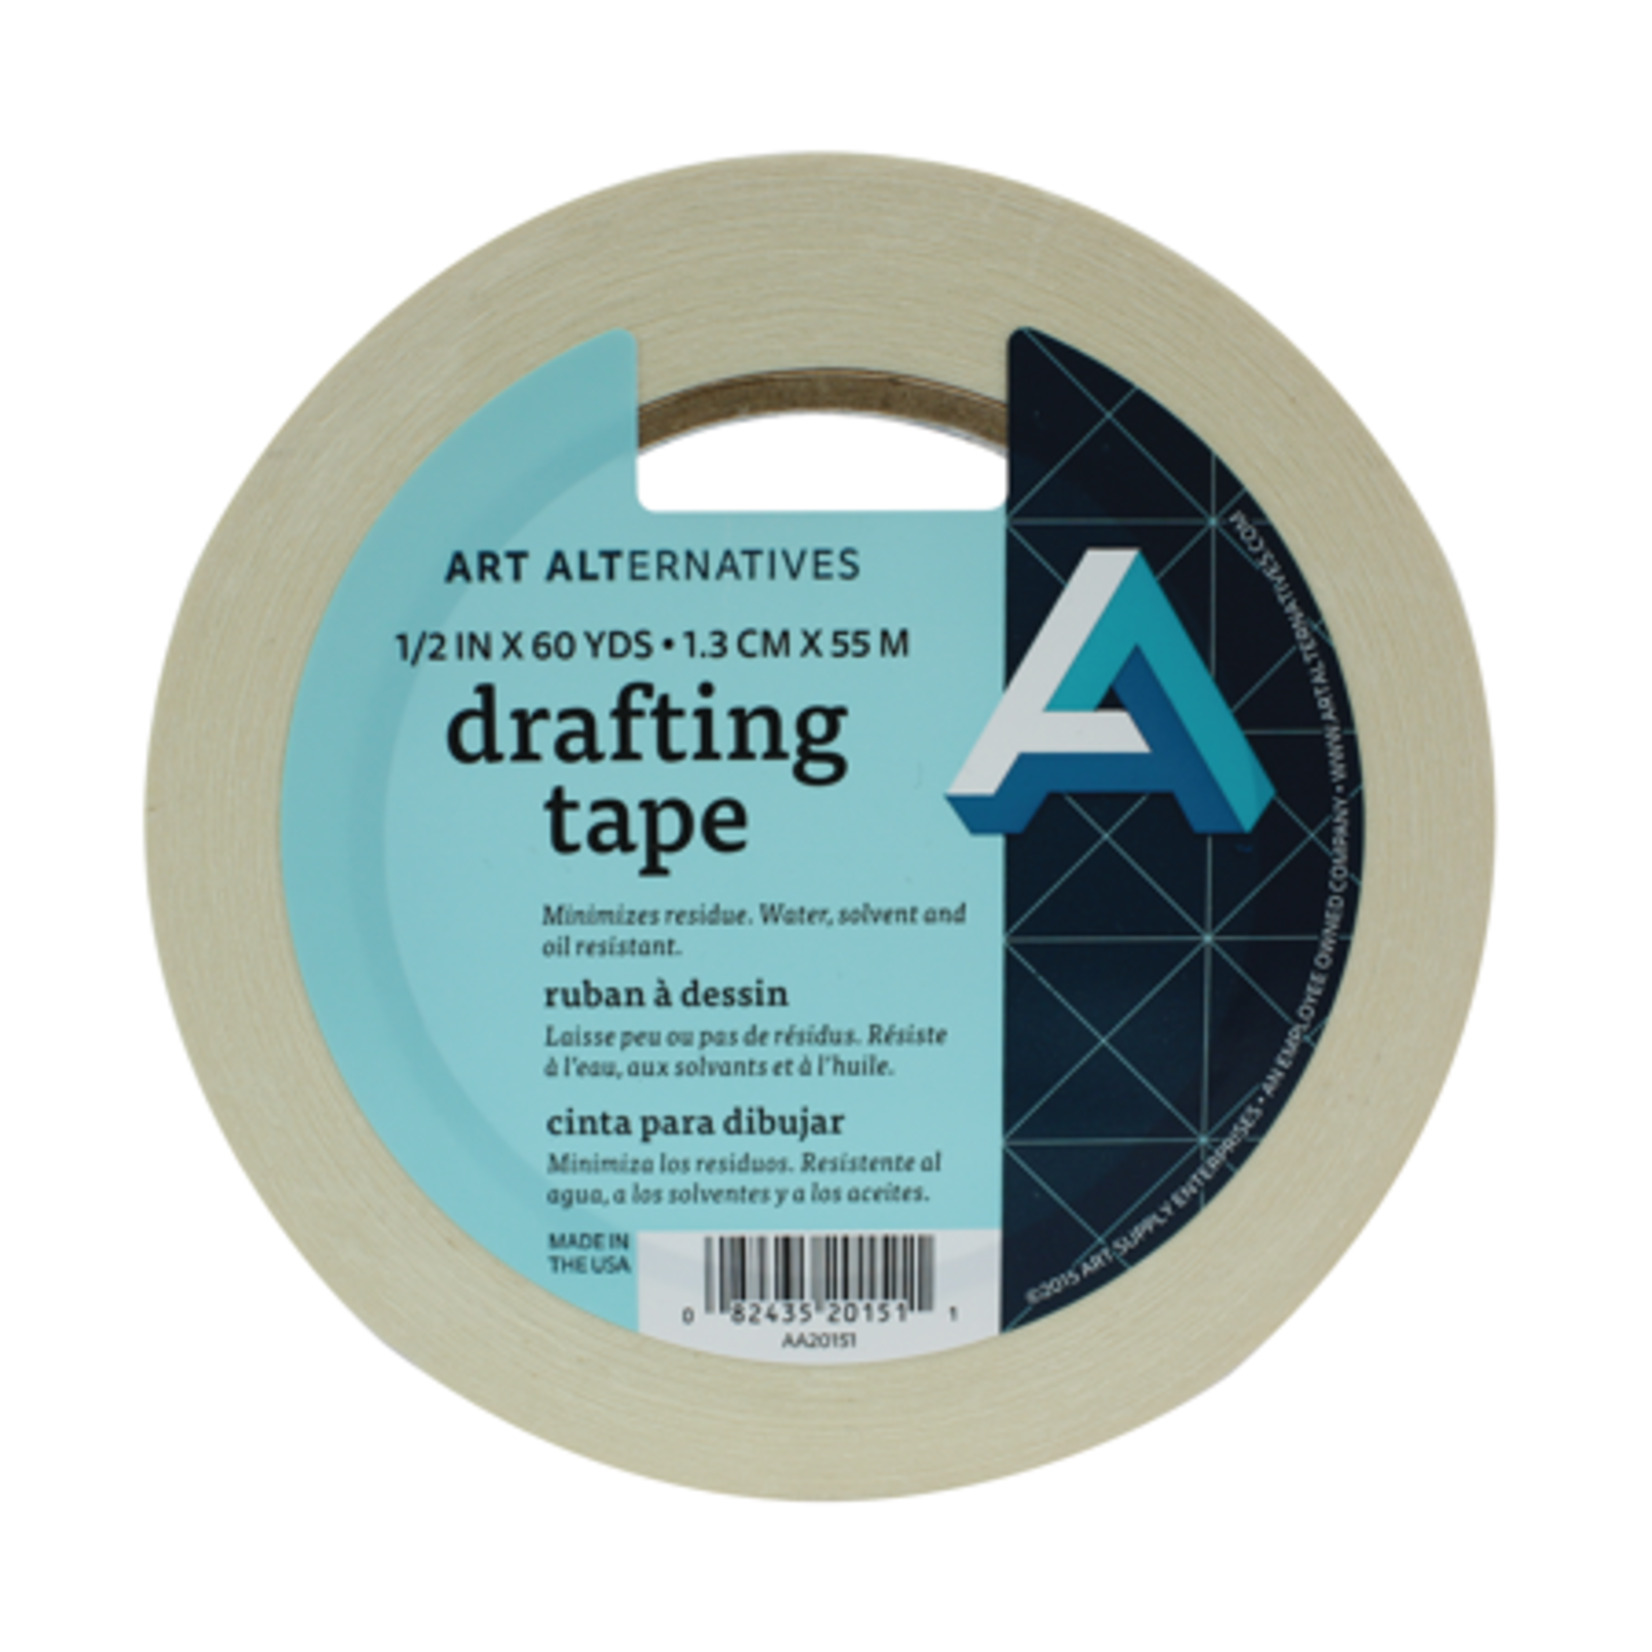 Art Alternatives Tape Drafting 1/2" x 60 yards